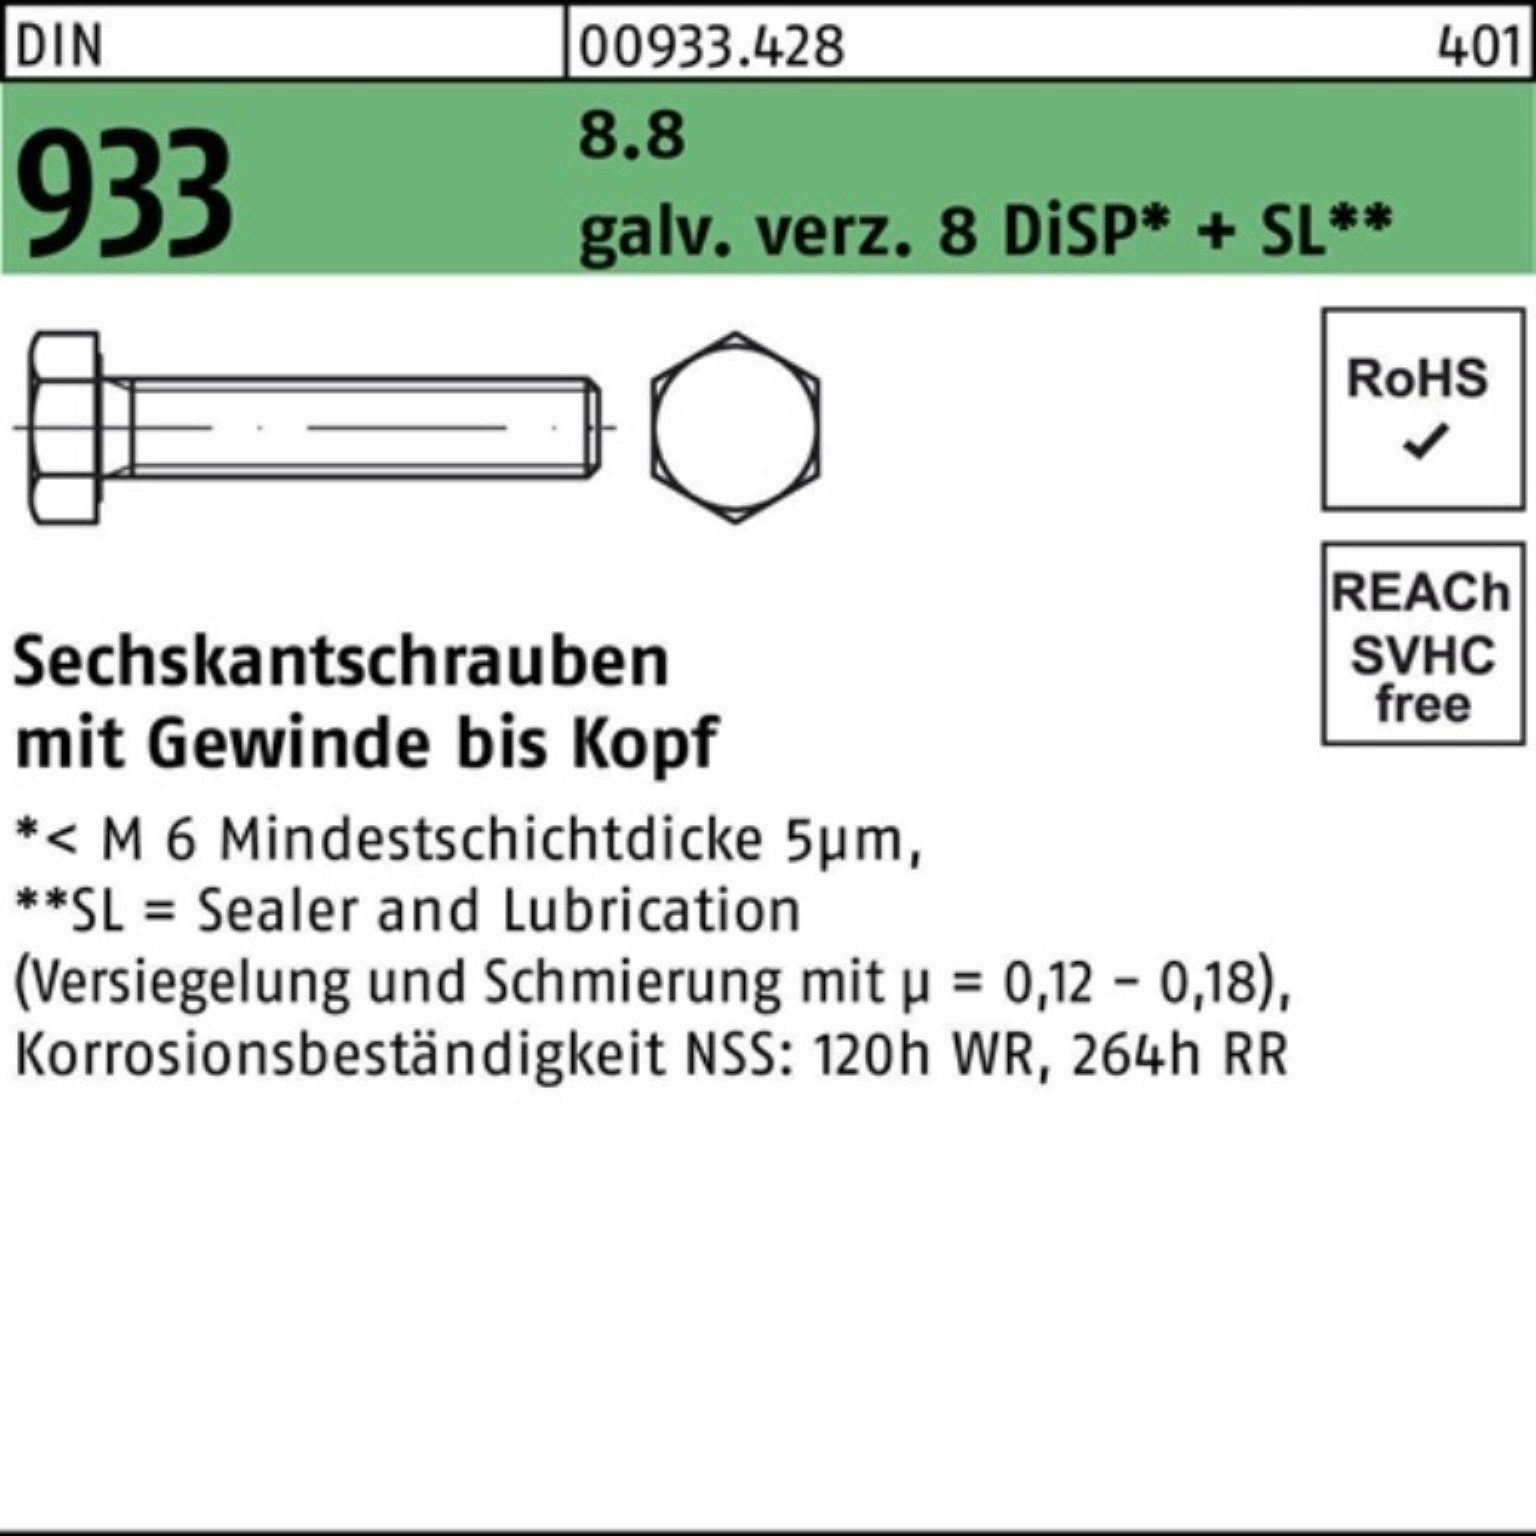 Reyher Sechskantschraube 100er Pack Sechskantschraube Zn DIN SL 933 8.8 gal 8 + 50 VG M20x DiSP